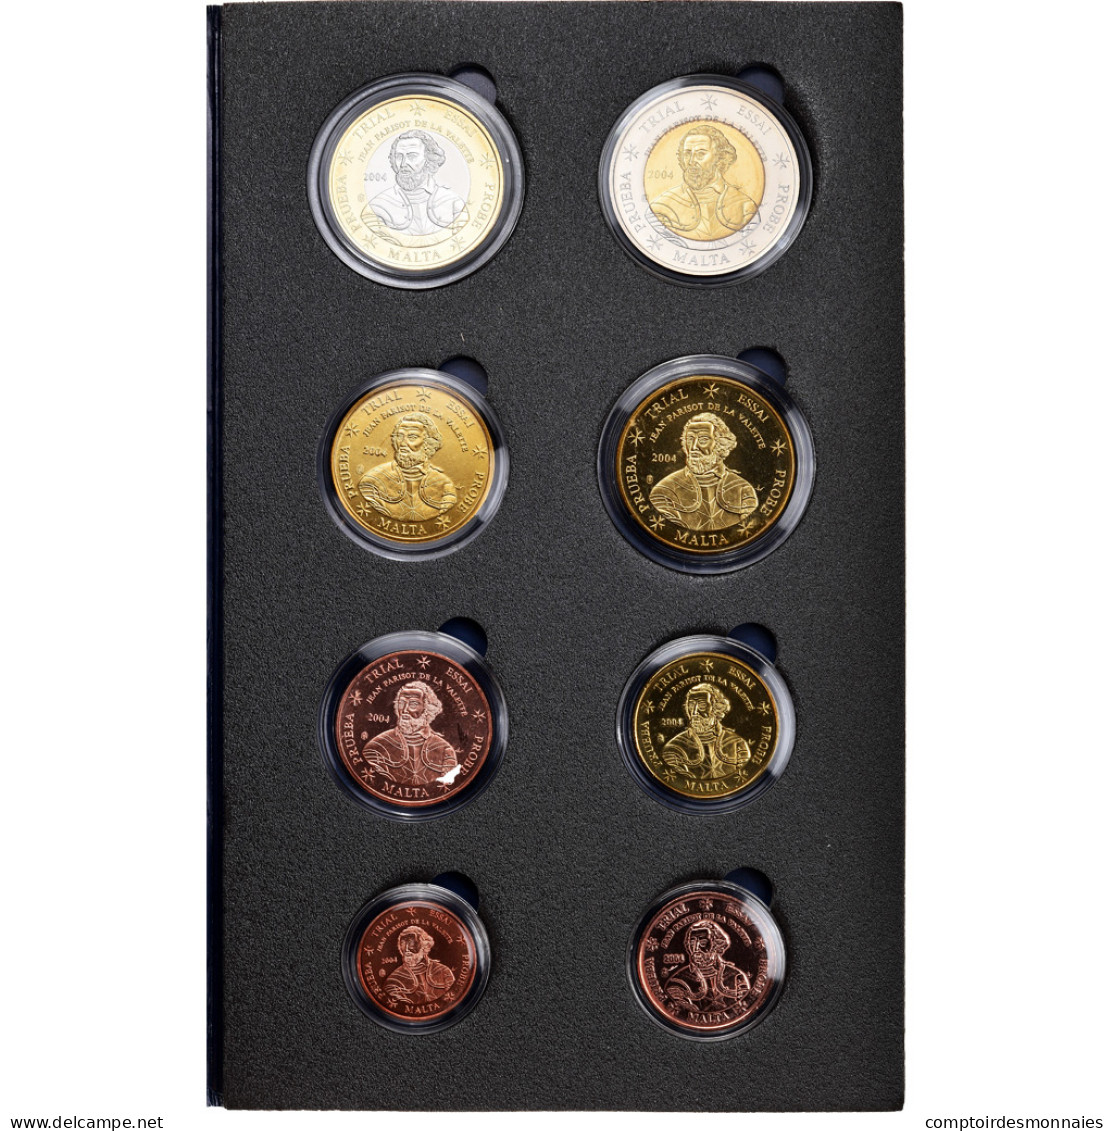 Malte, 1 Cent To 2 Euro, 2004, Unofficial Private Coin, SPL - Pruebas Privadas